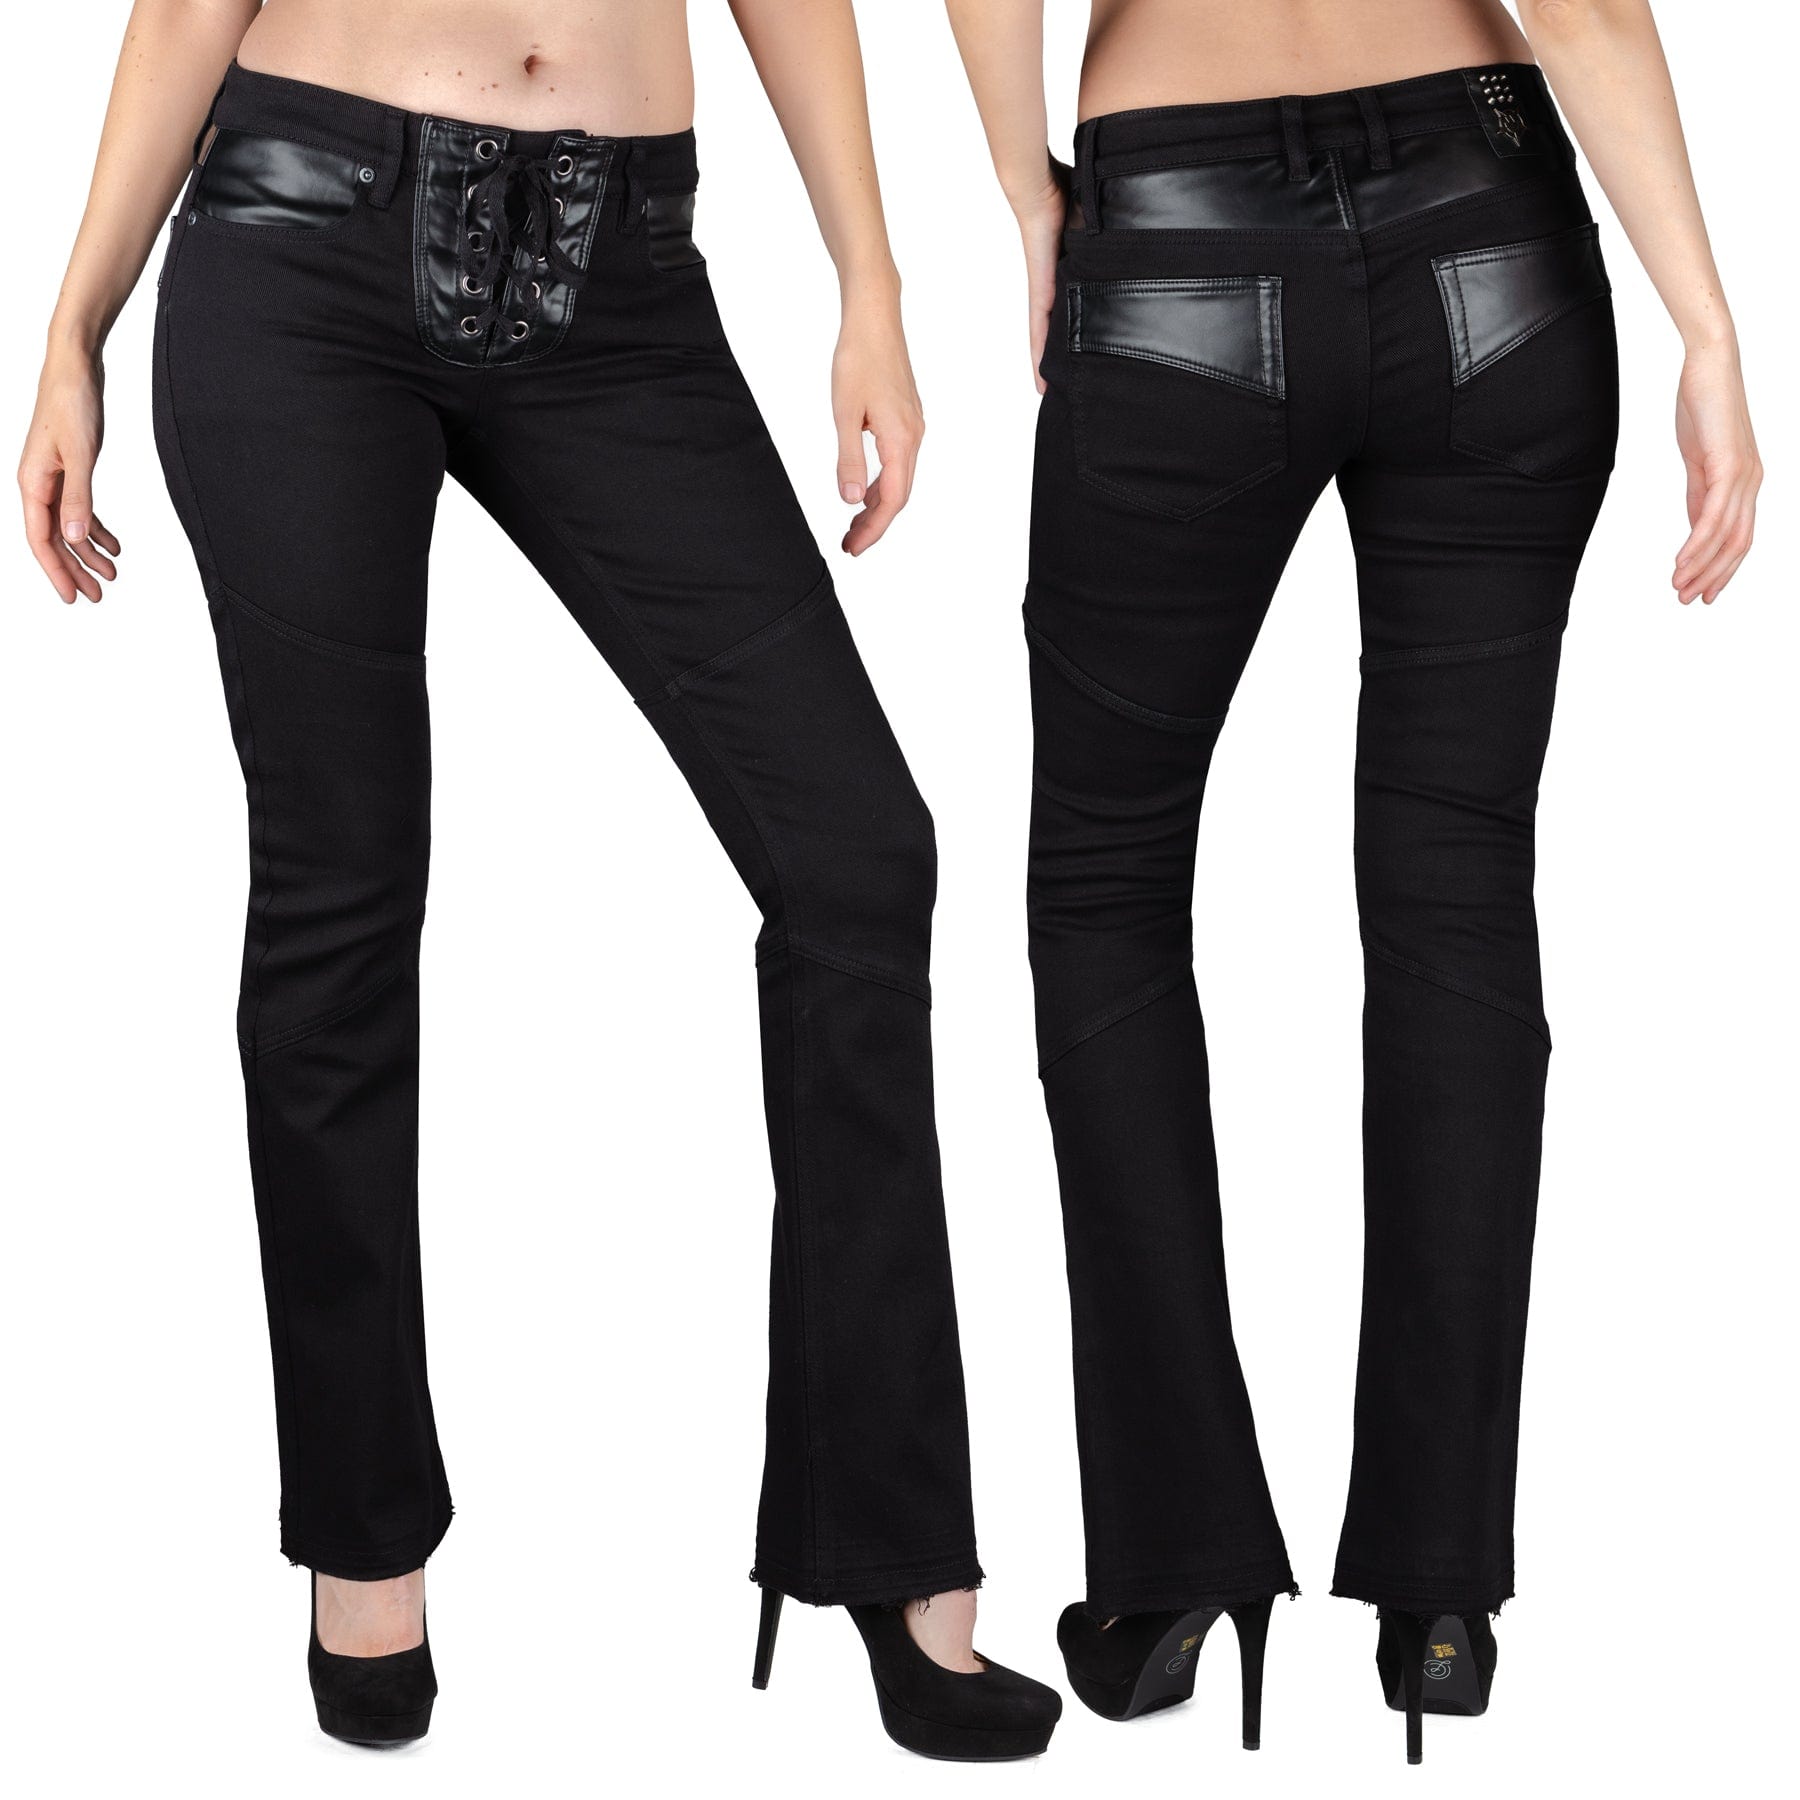 Wornstar Clothing Troubadour Unisex Stage Jeans - Black